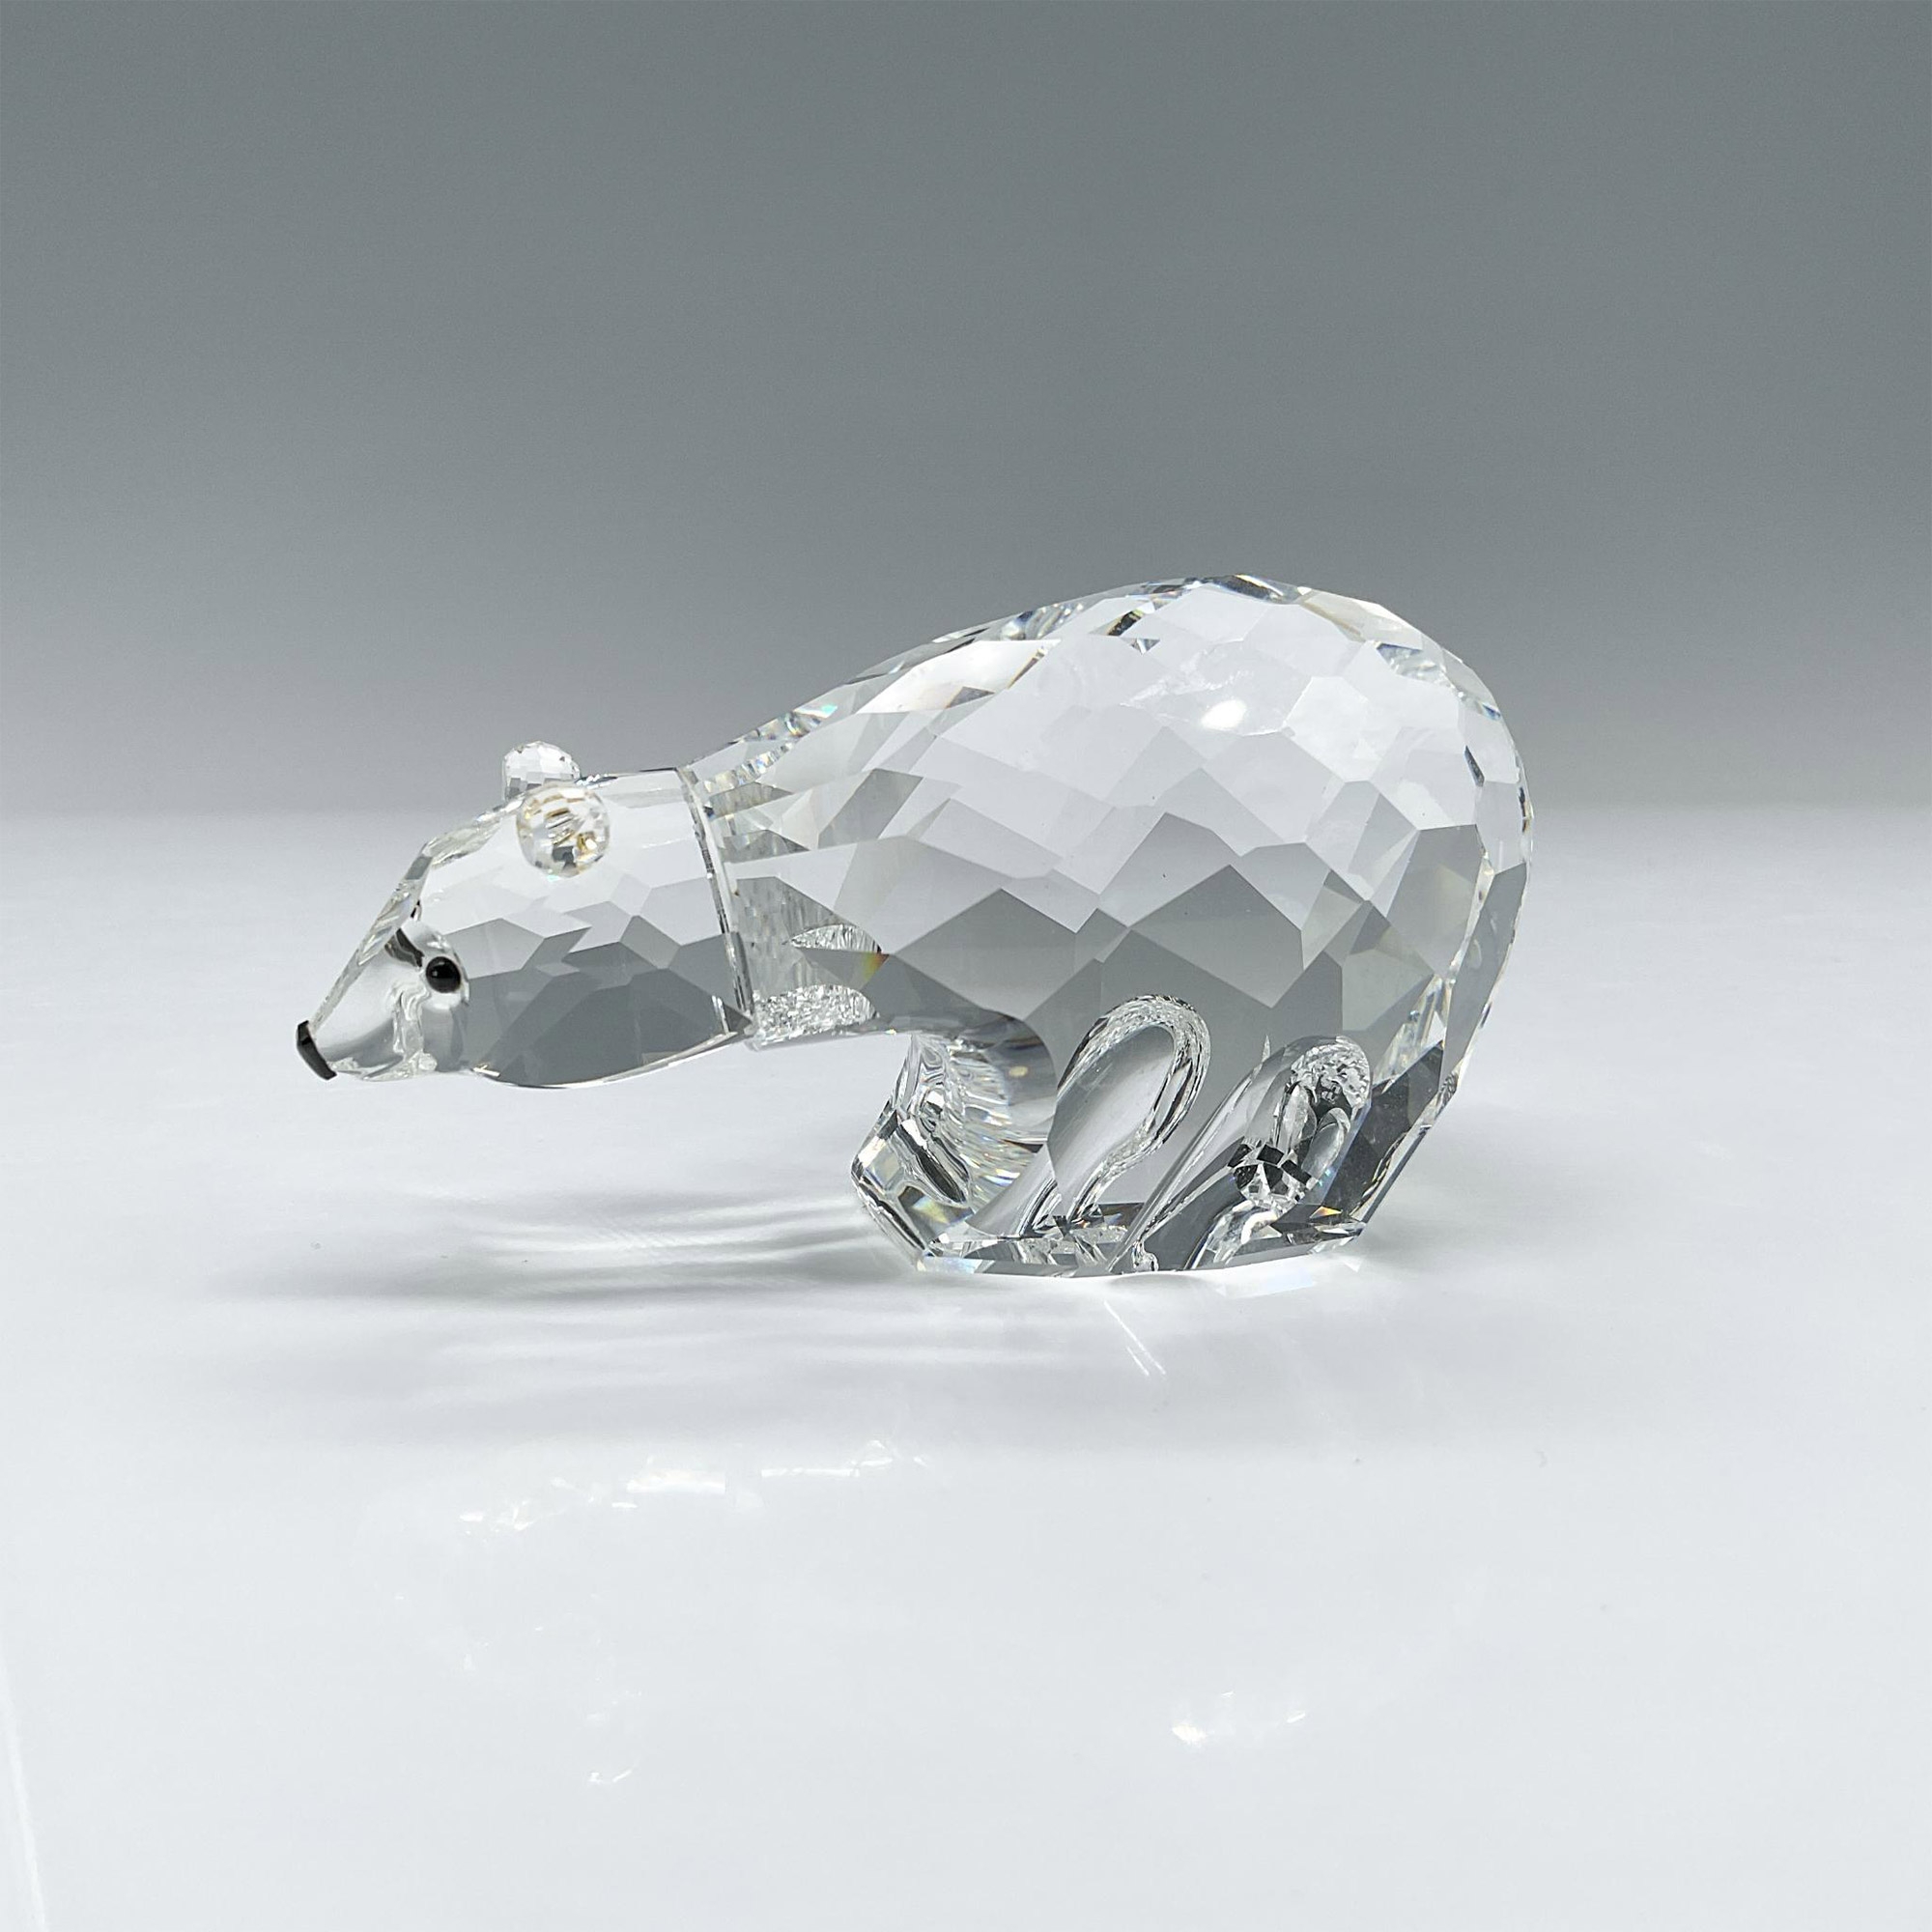 Swarovski Crystal Figurine, Polar Bear - Image 2 of 4